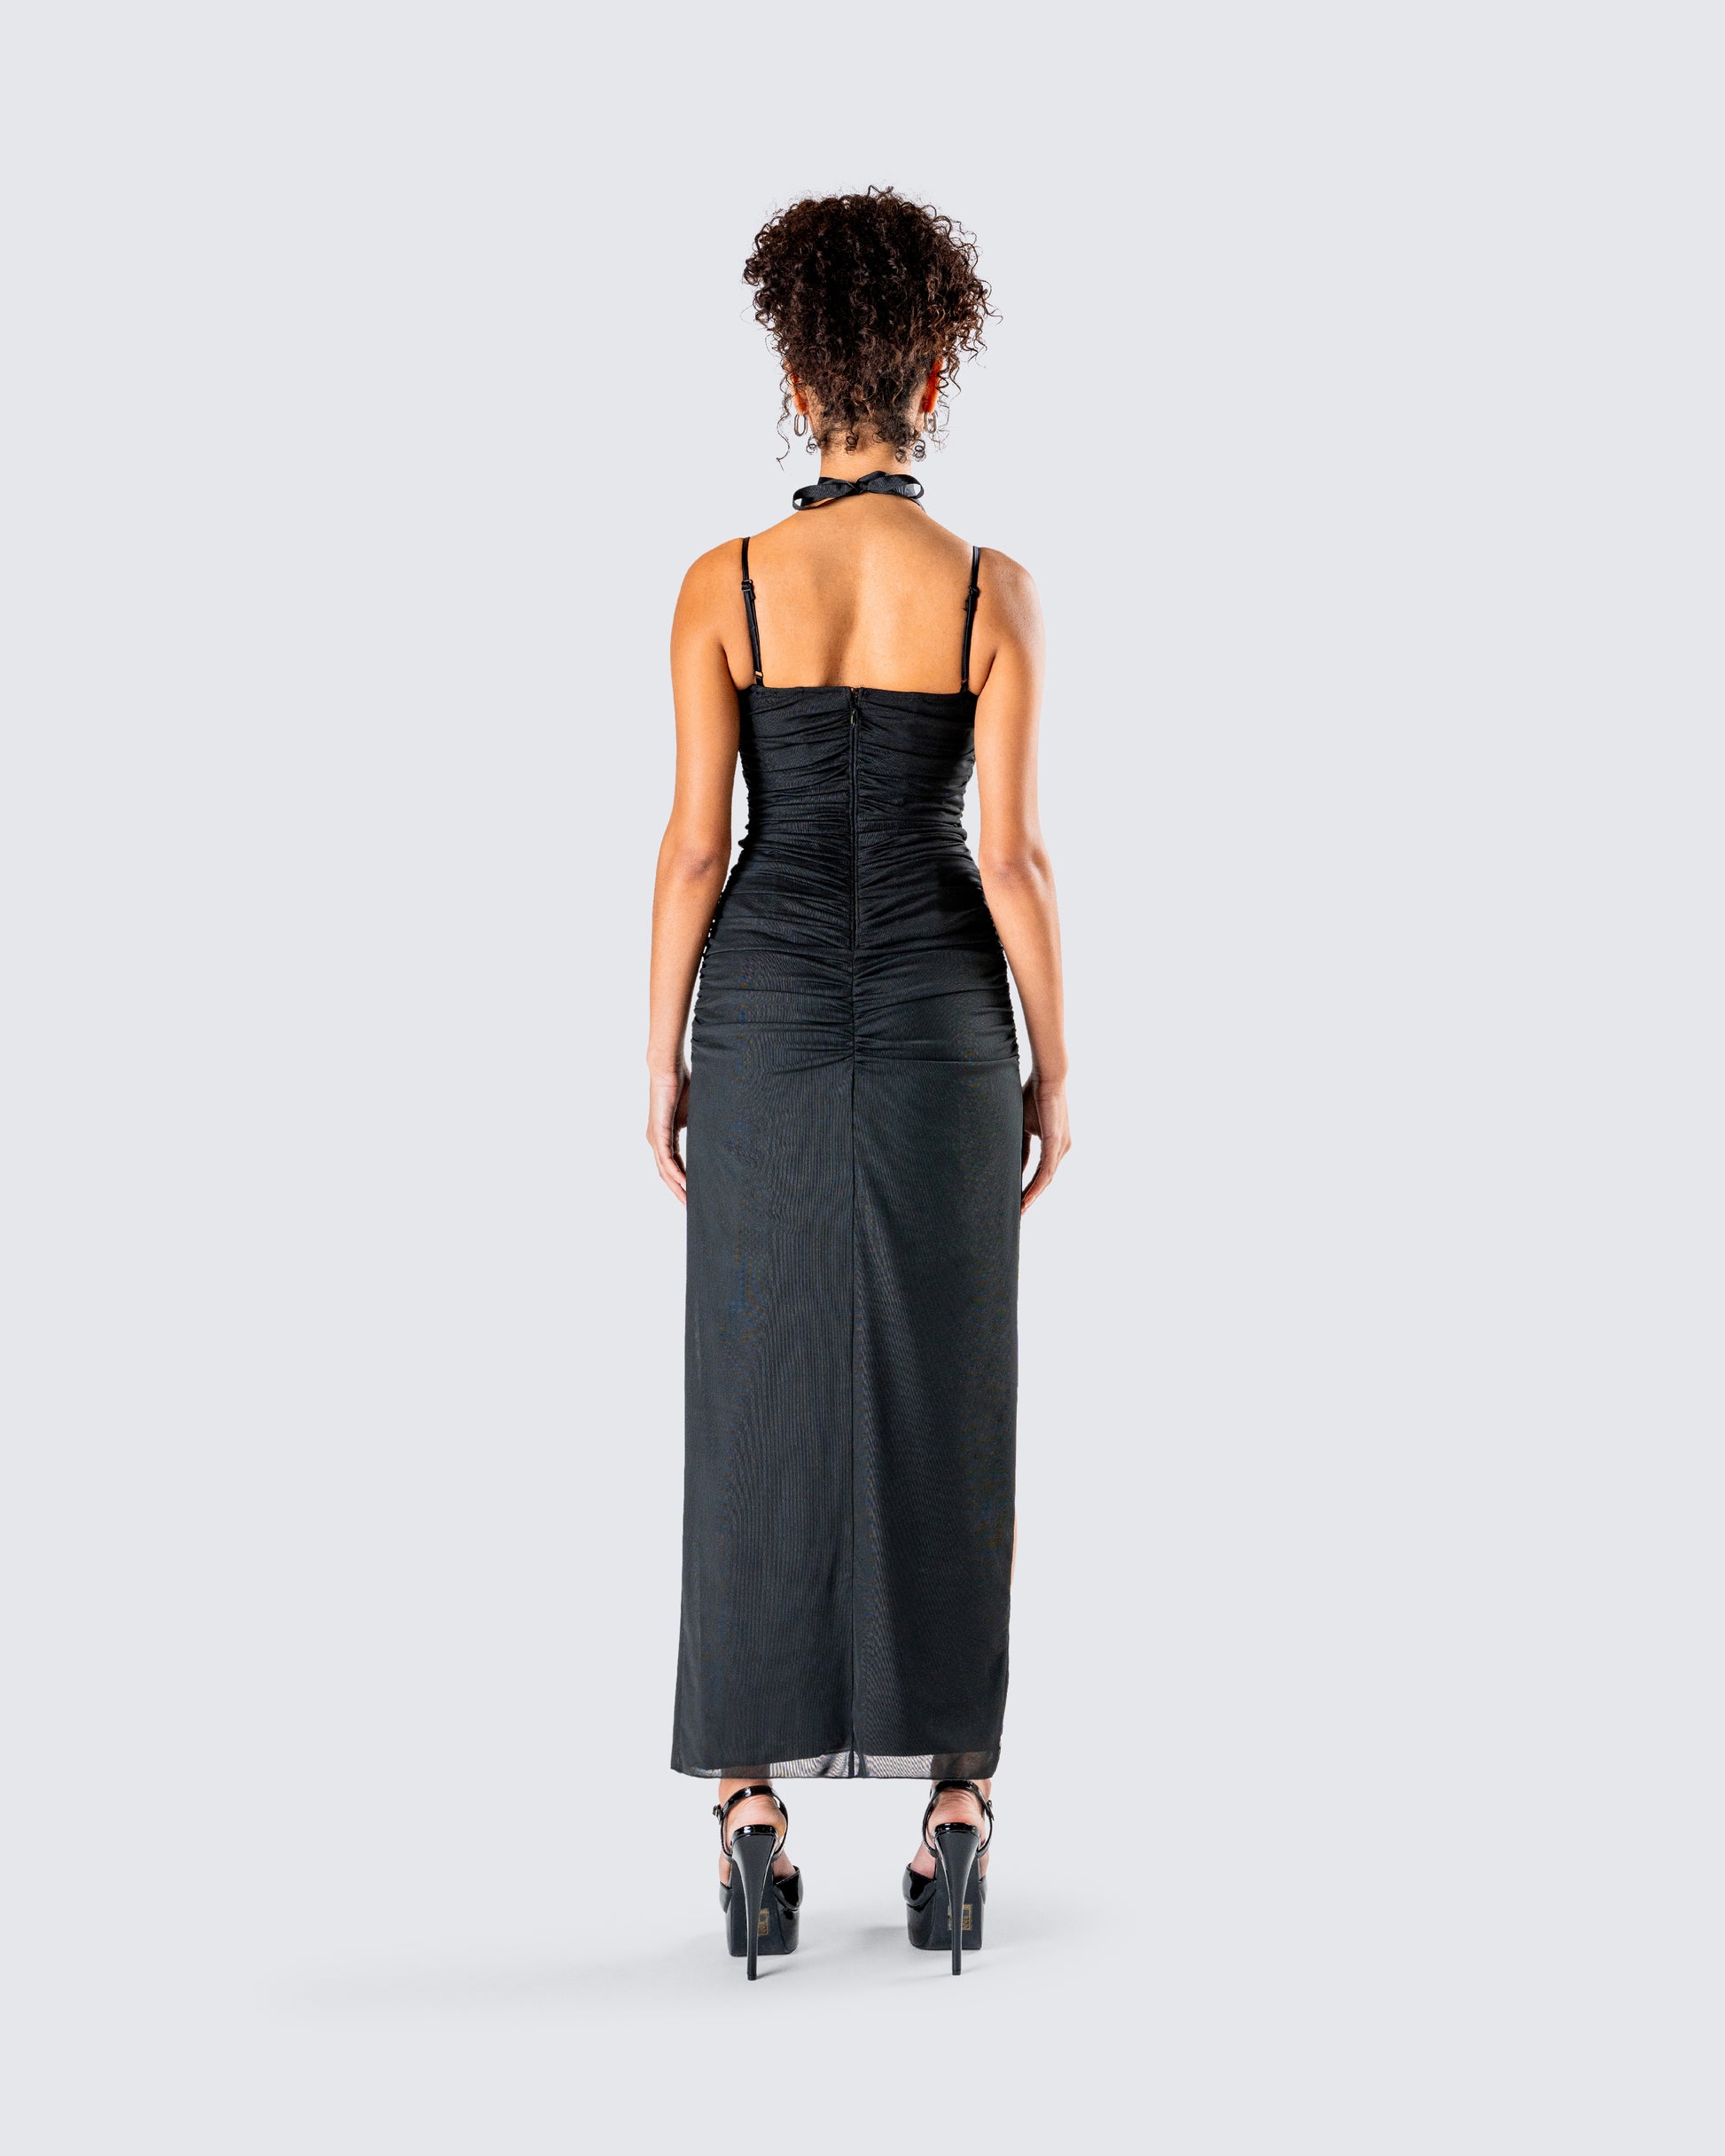 Black Lace Corset Strapless Maxi Dress